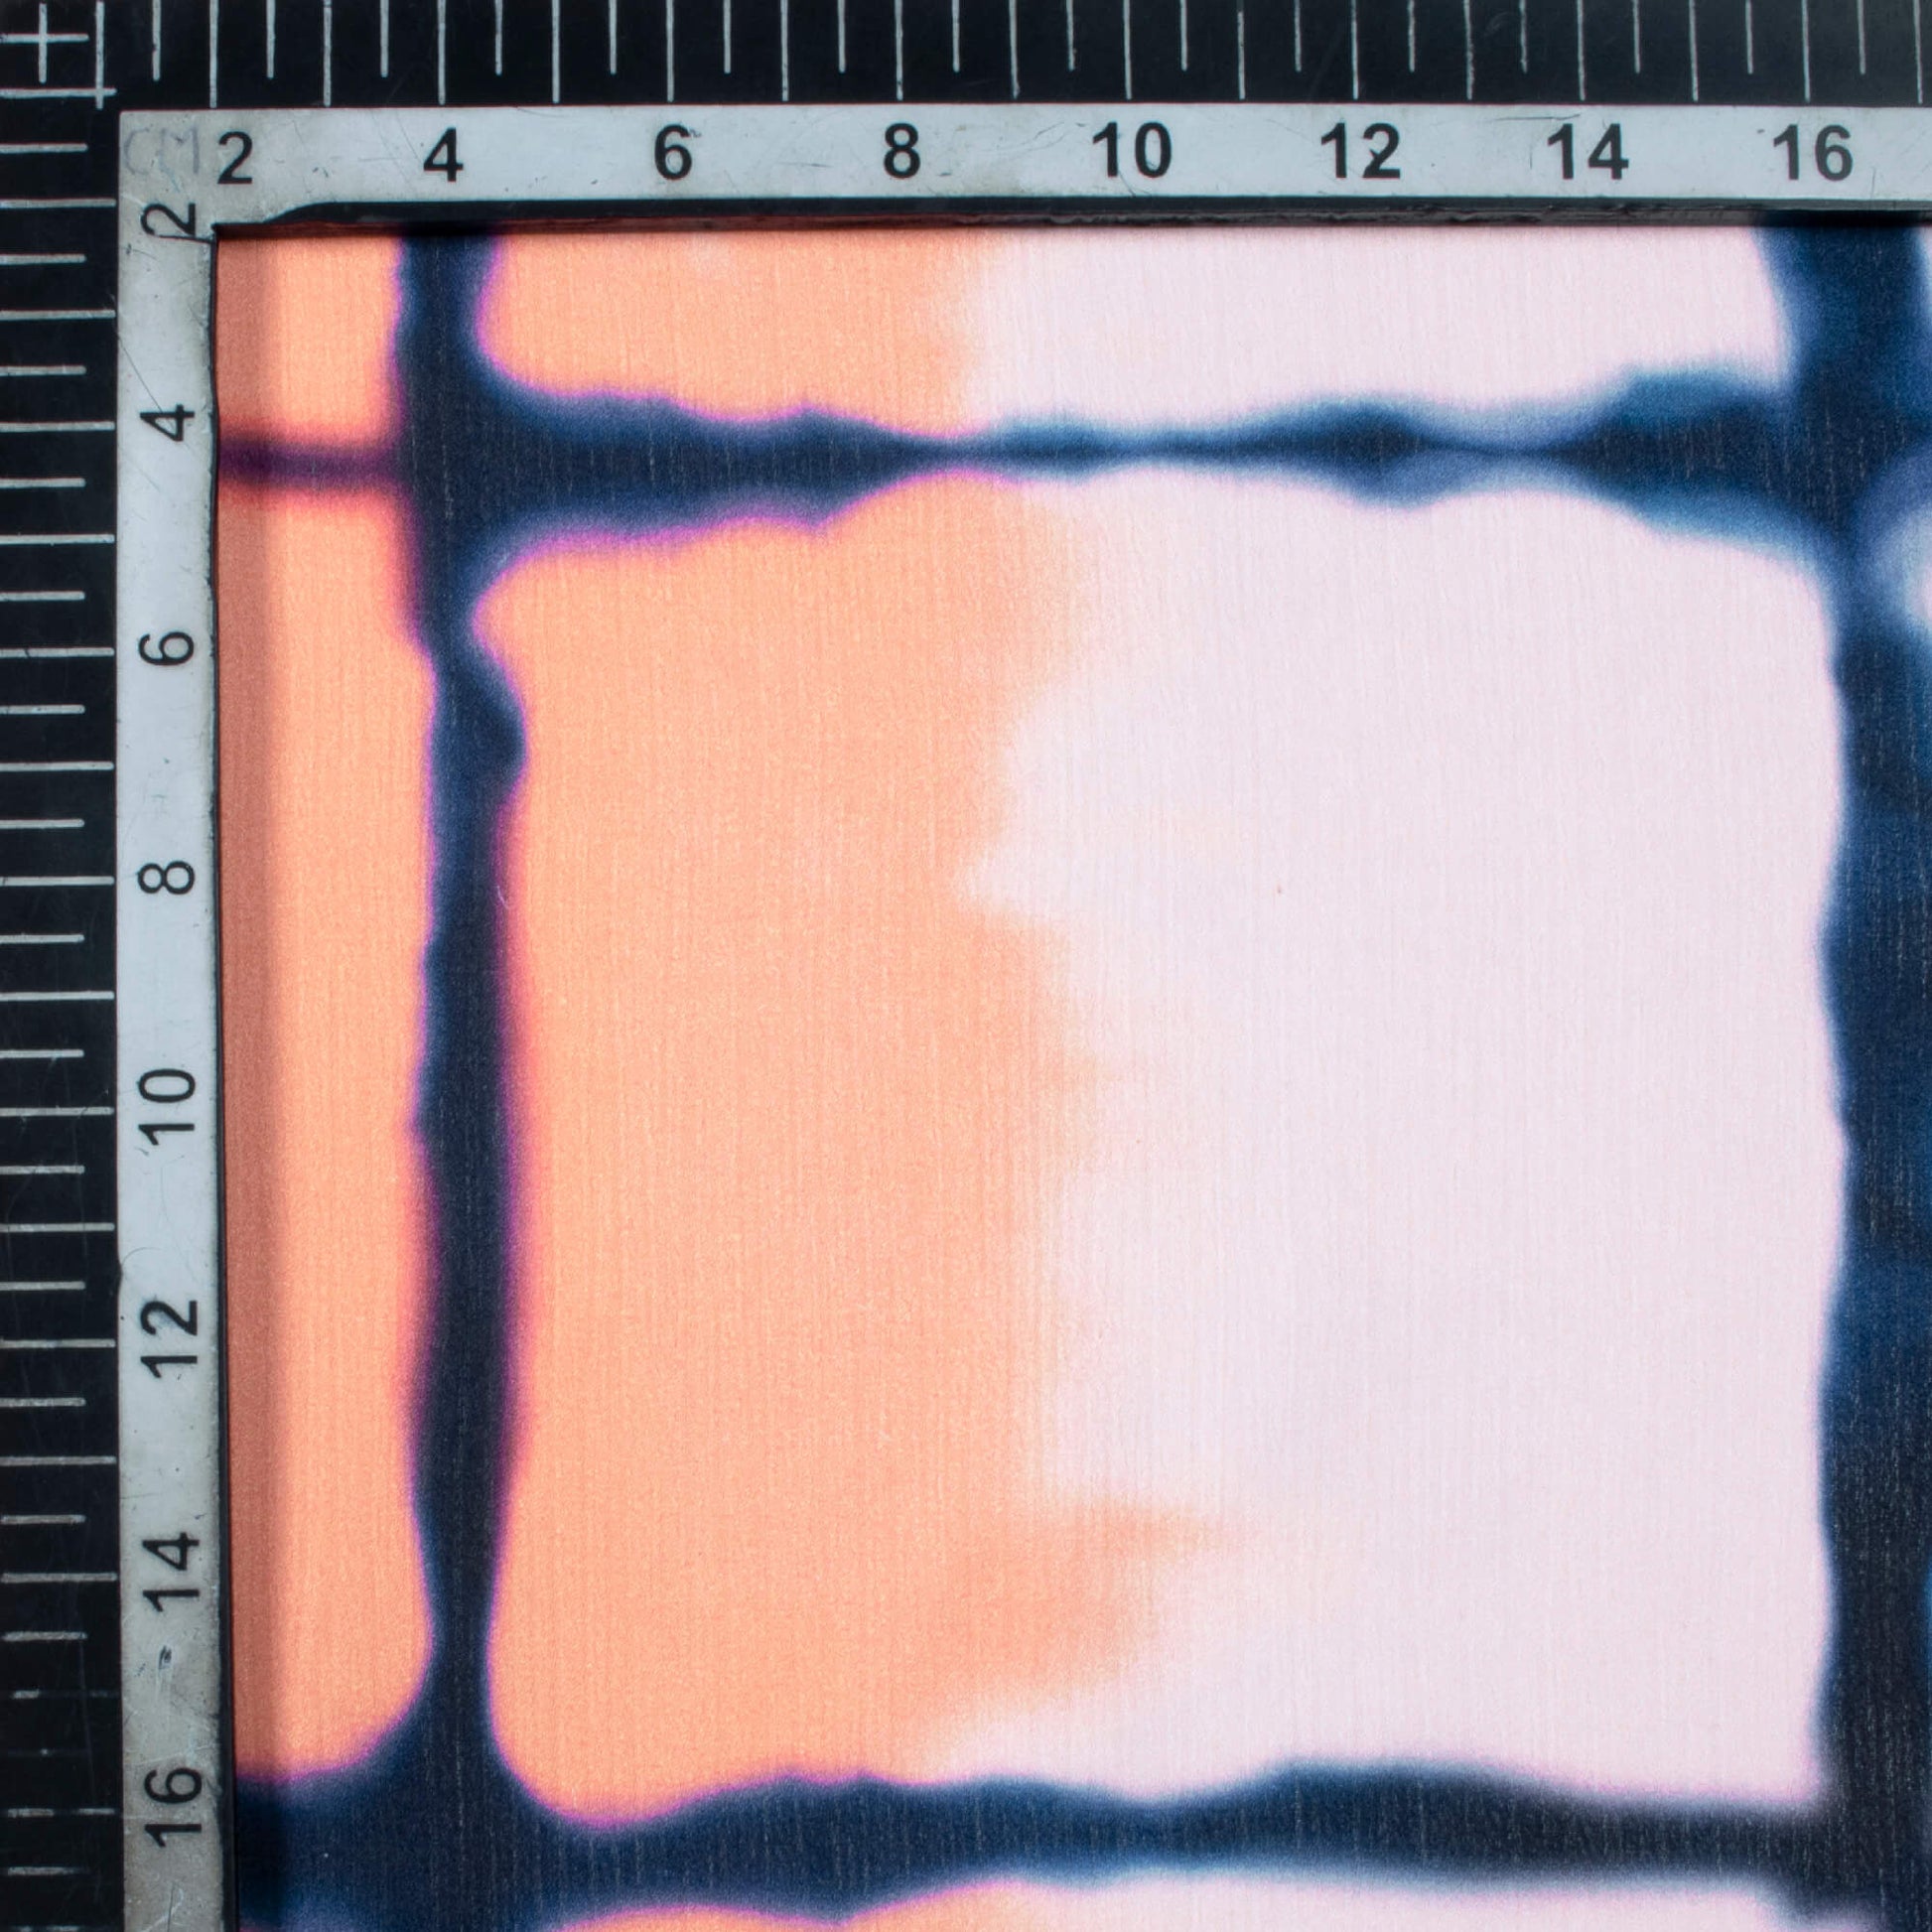 Coral Peach And Navy Blue Checks Pattern Digital Print Chiffon Satin Fabric - Fabcurate